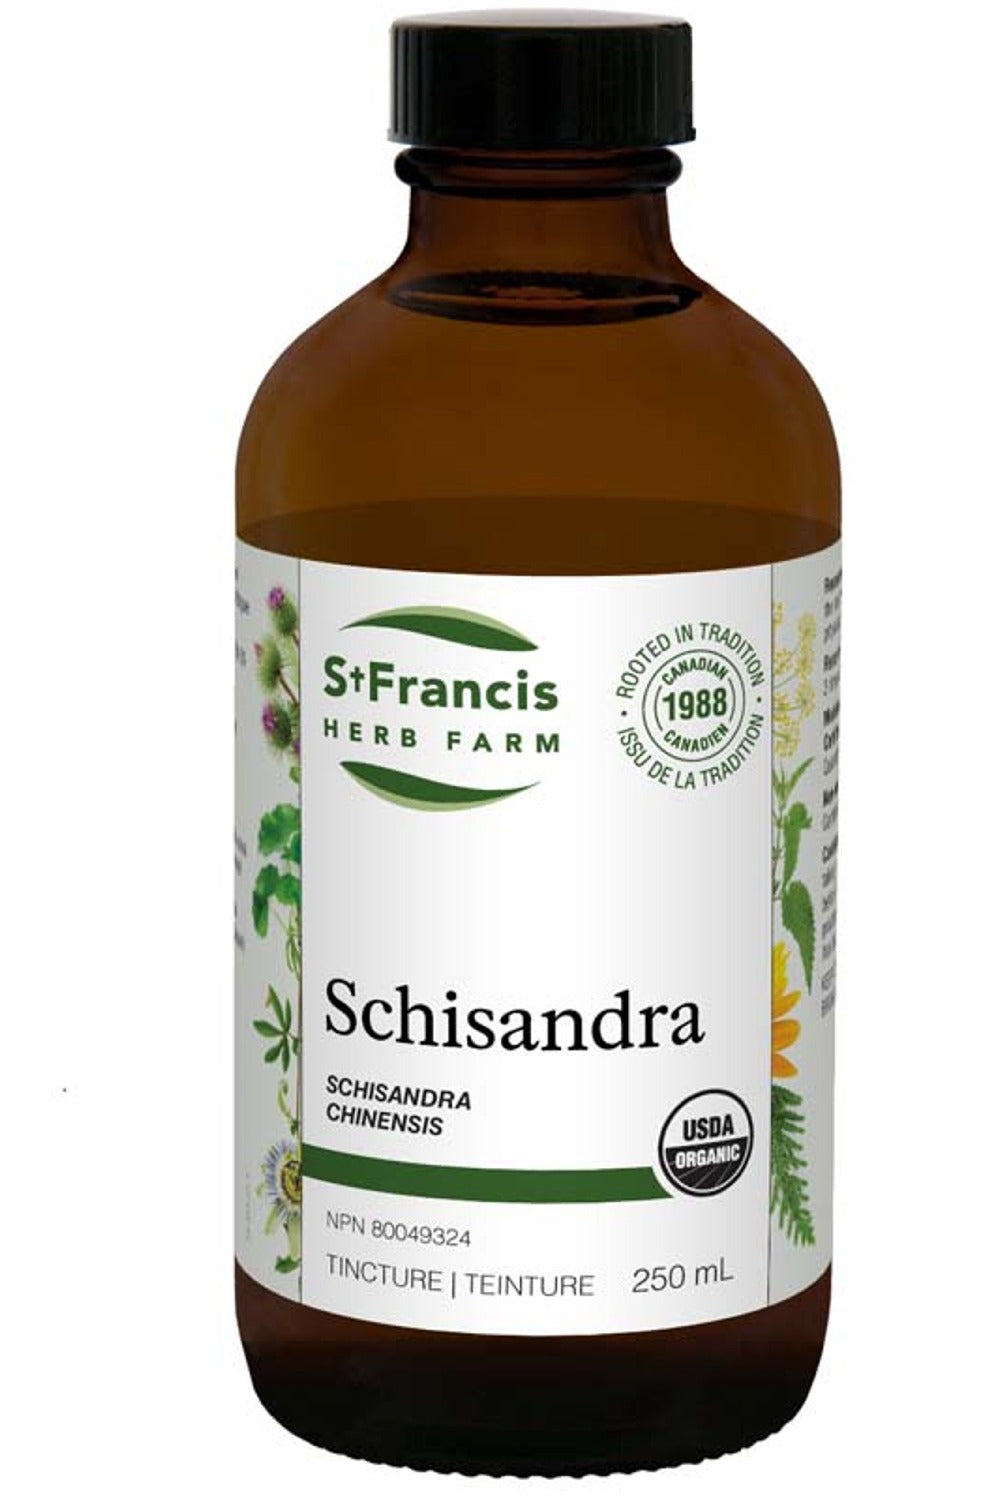 ST FRANCIS HERB FARM Schisandra (250 ml)